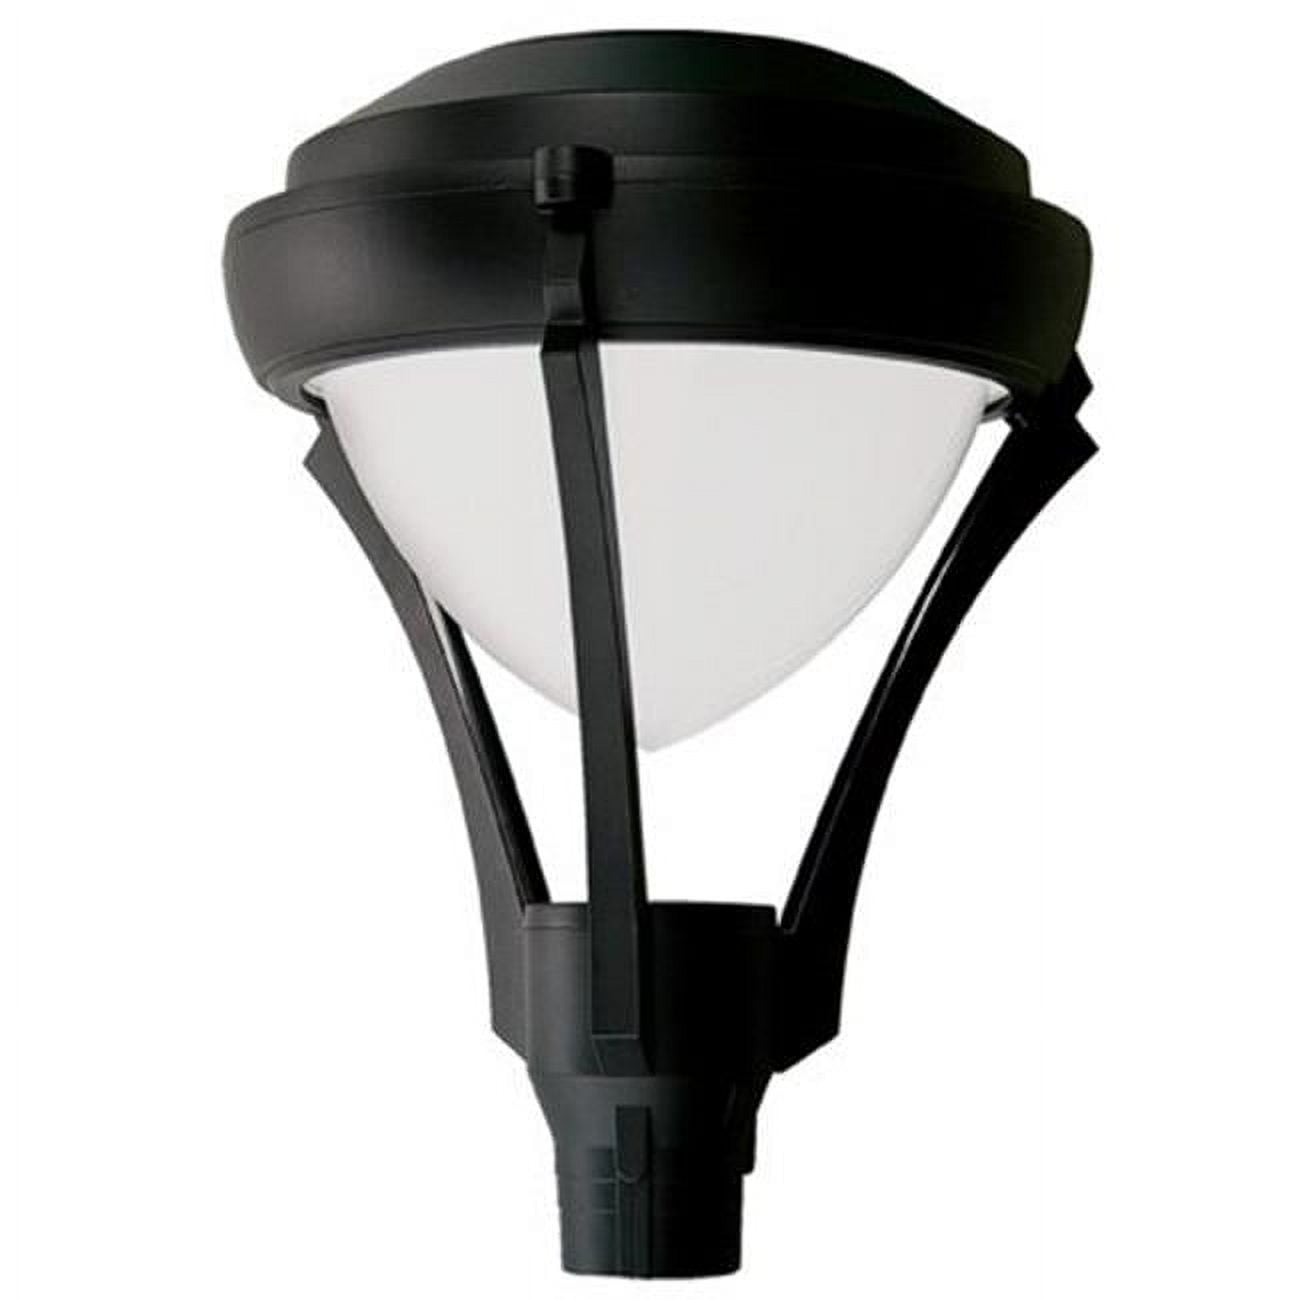 Gm596-b-mt 50w Powder Coated Cast Aluminum Post Top Light Fixture With Metal Halide Lamp, Black - 27.95 X 21.65 X 21.65 In.